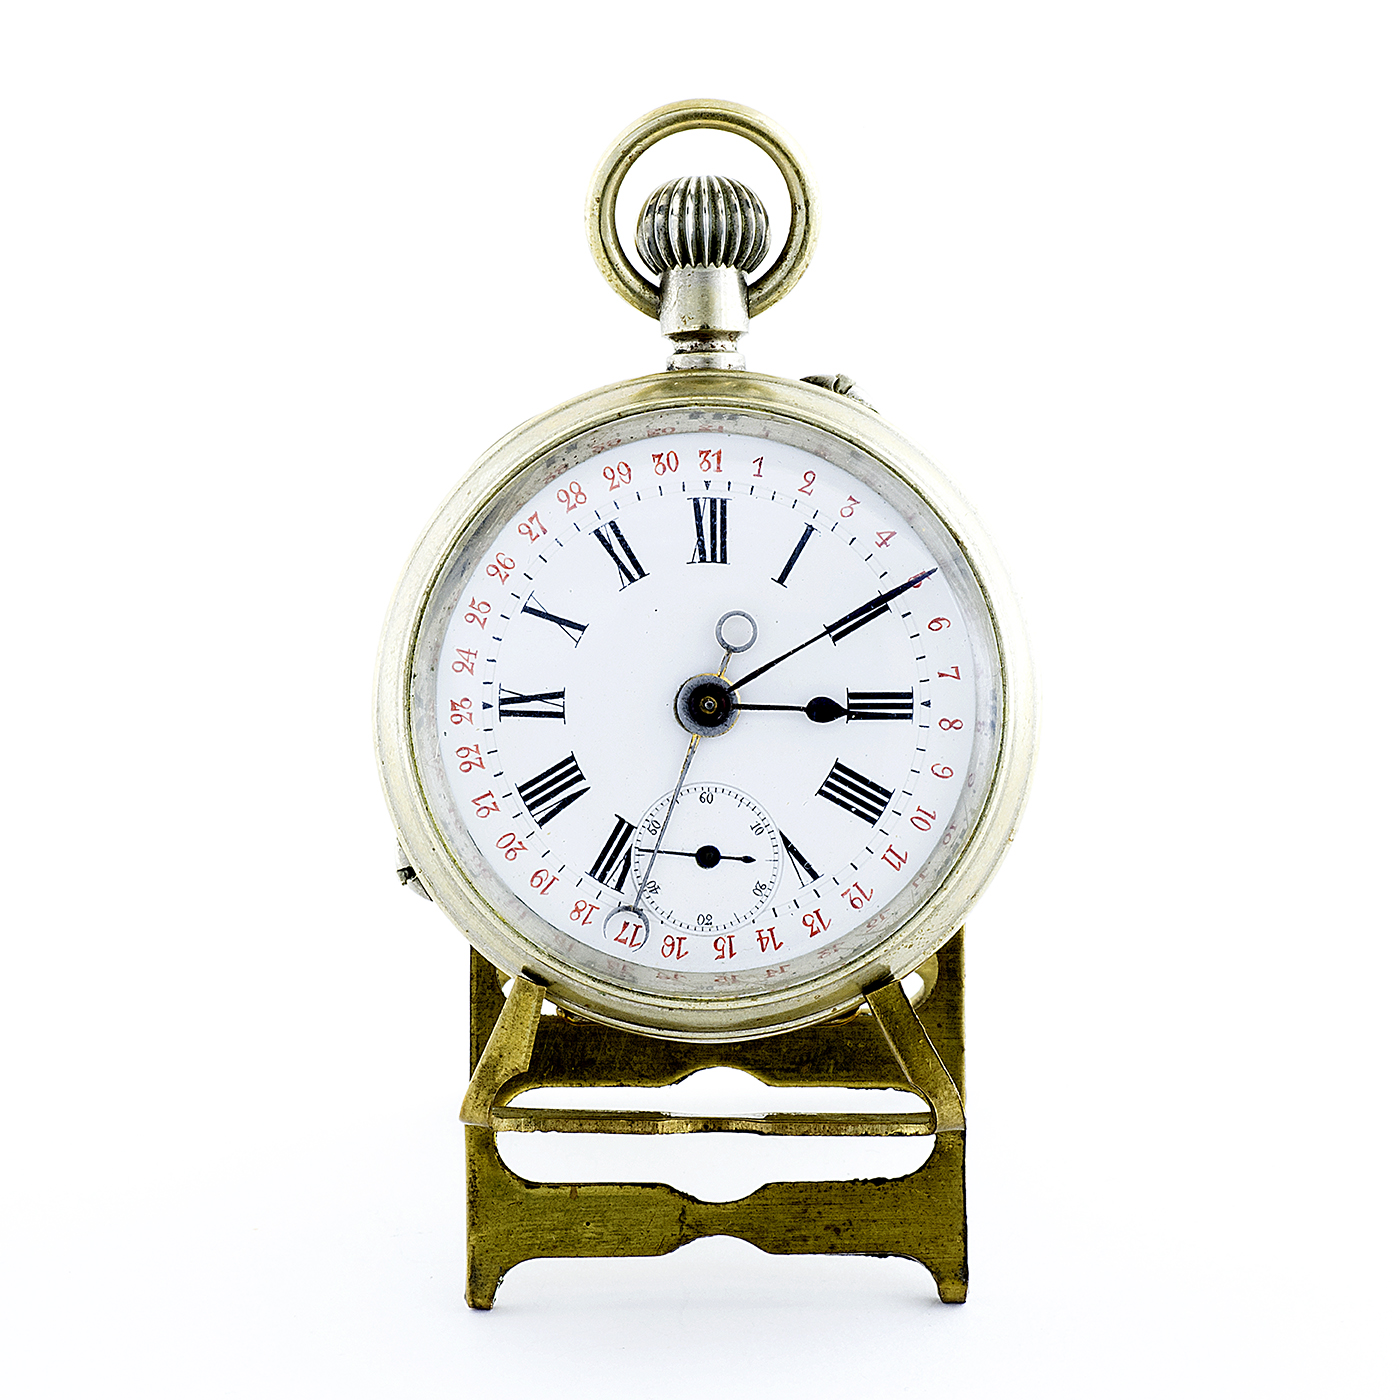 Fortuna. Reloj Calendario de Bolsillo para hombre, Lepine y Remontoir. Ca. 1900-1905